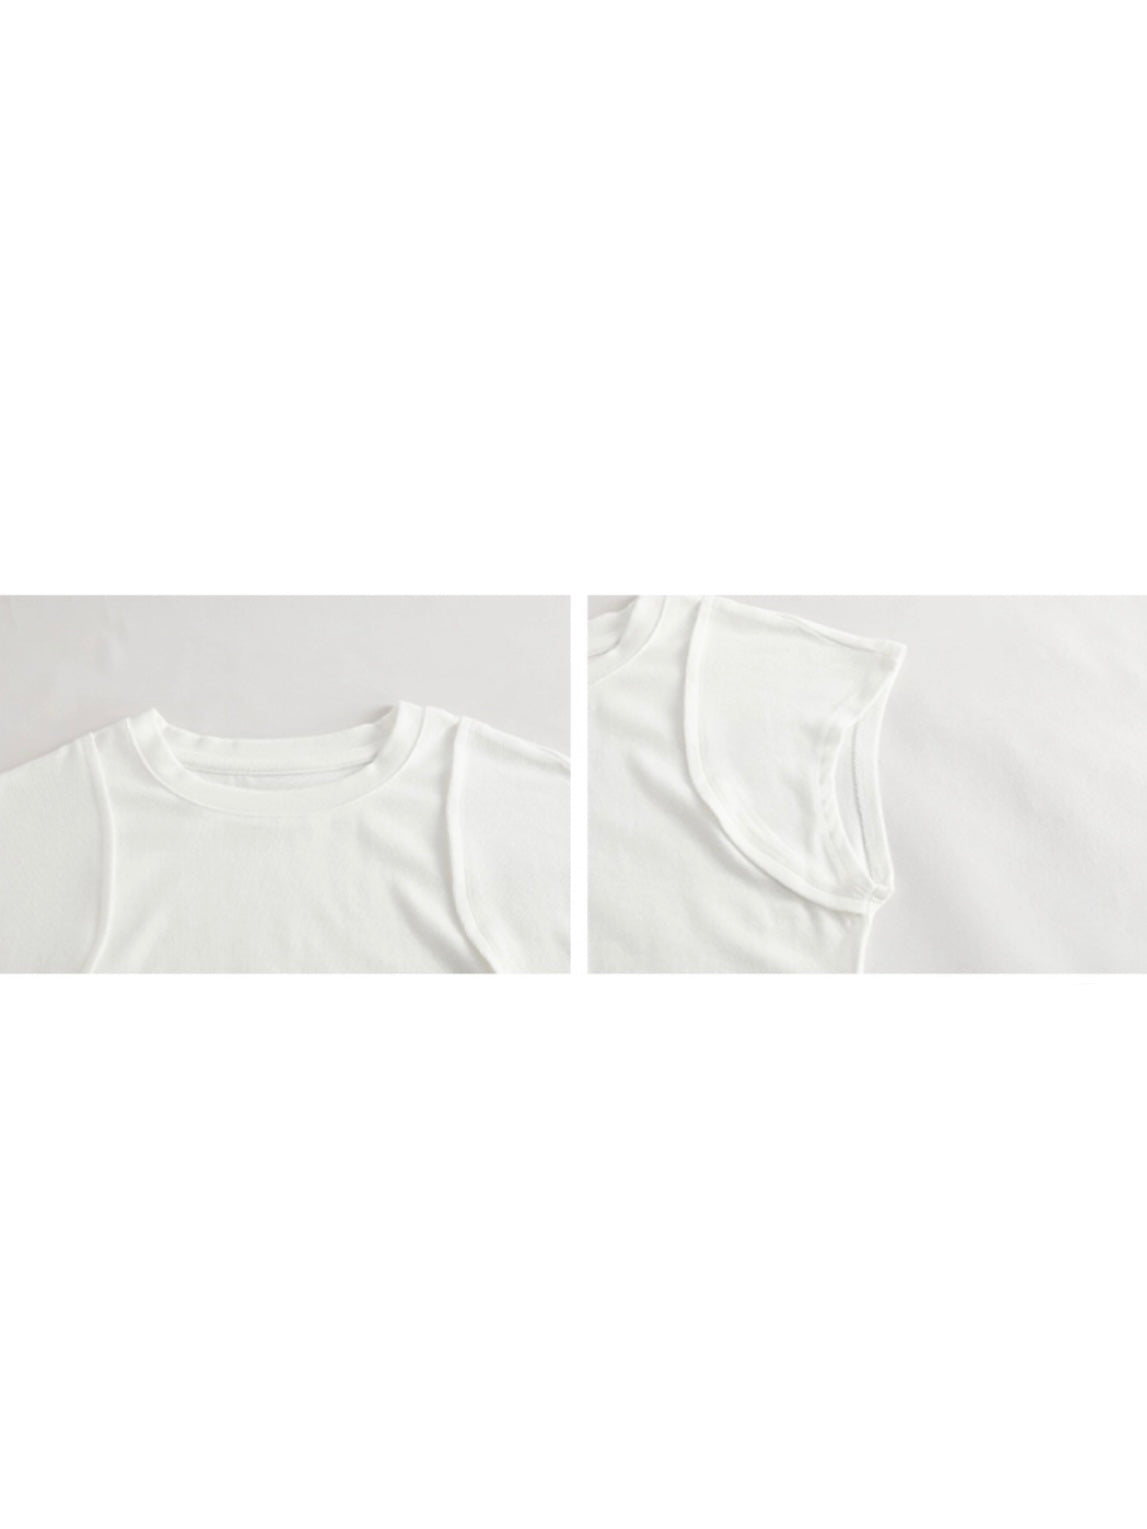 ≪ 2c's ≫ corner simple t shirt